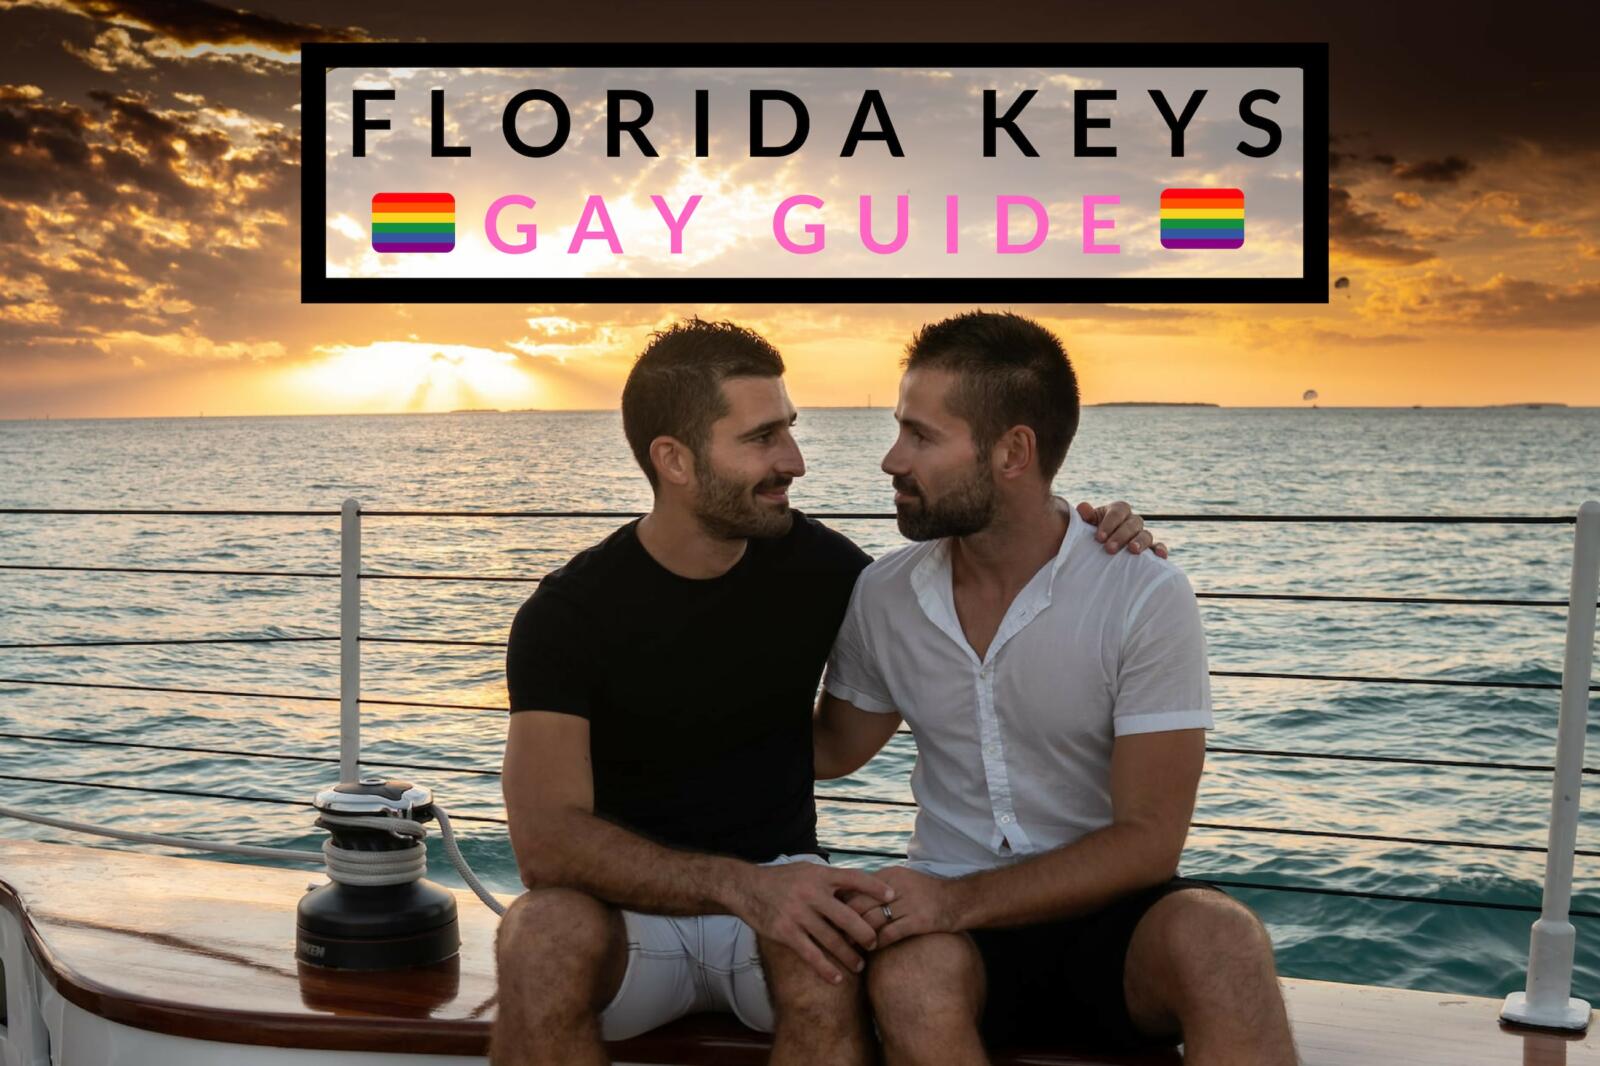 Florida-Keys-gay-guide.jpg